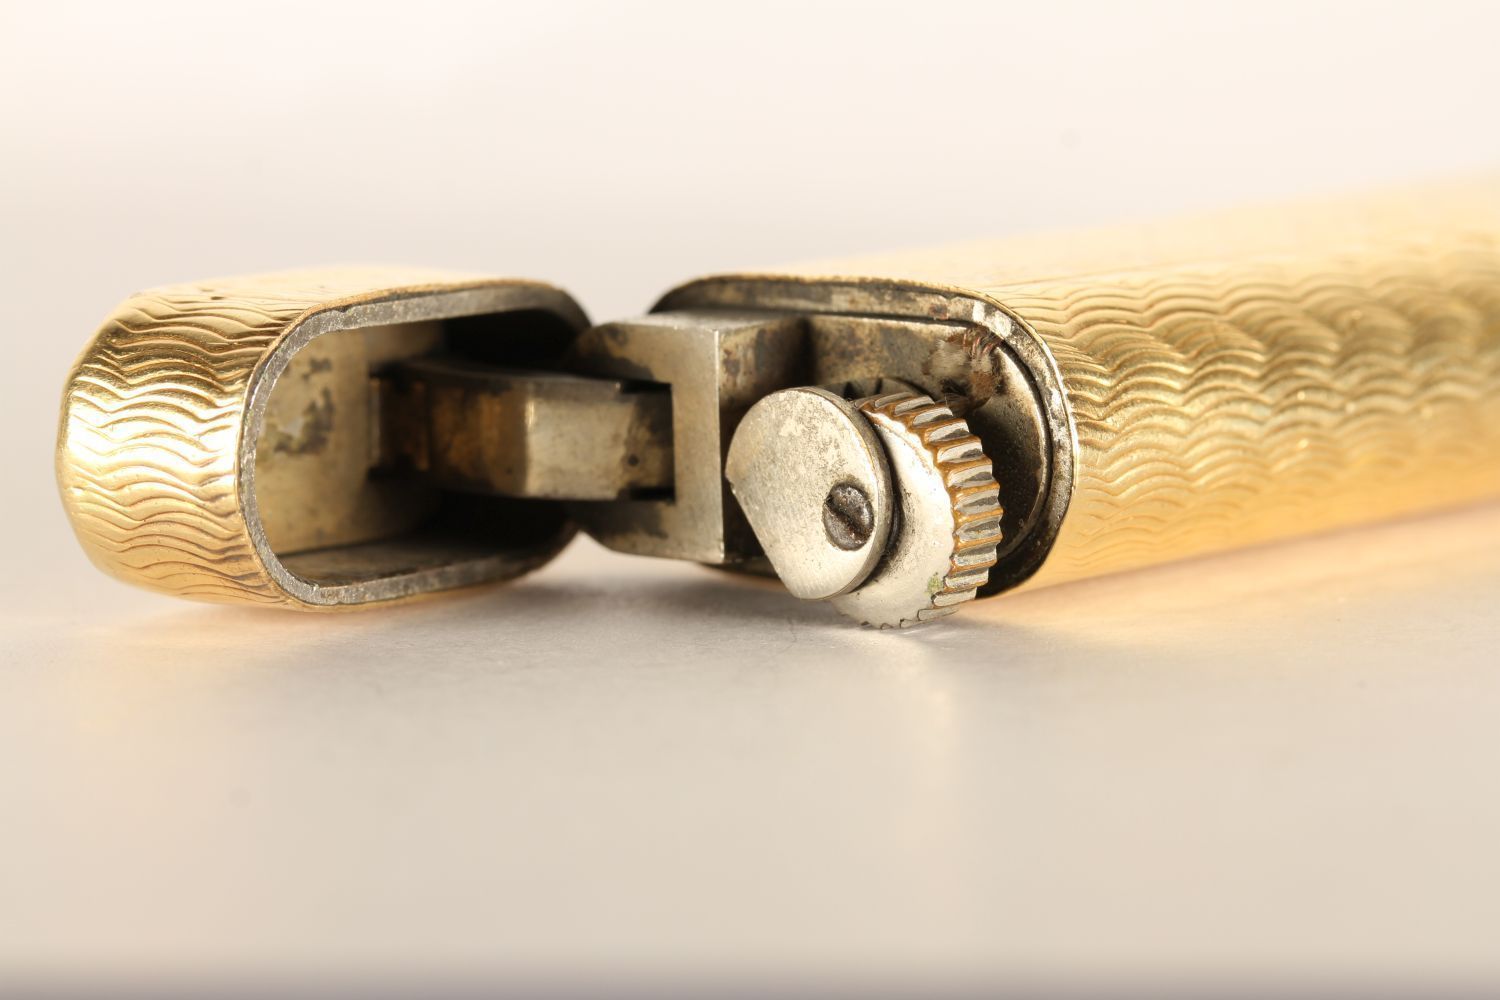 Cartier Lighter, gold patterned design, approximate length 7cm - Image 4 of 4